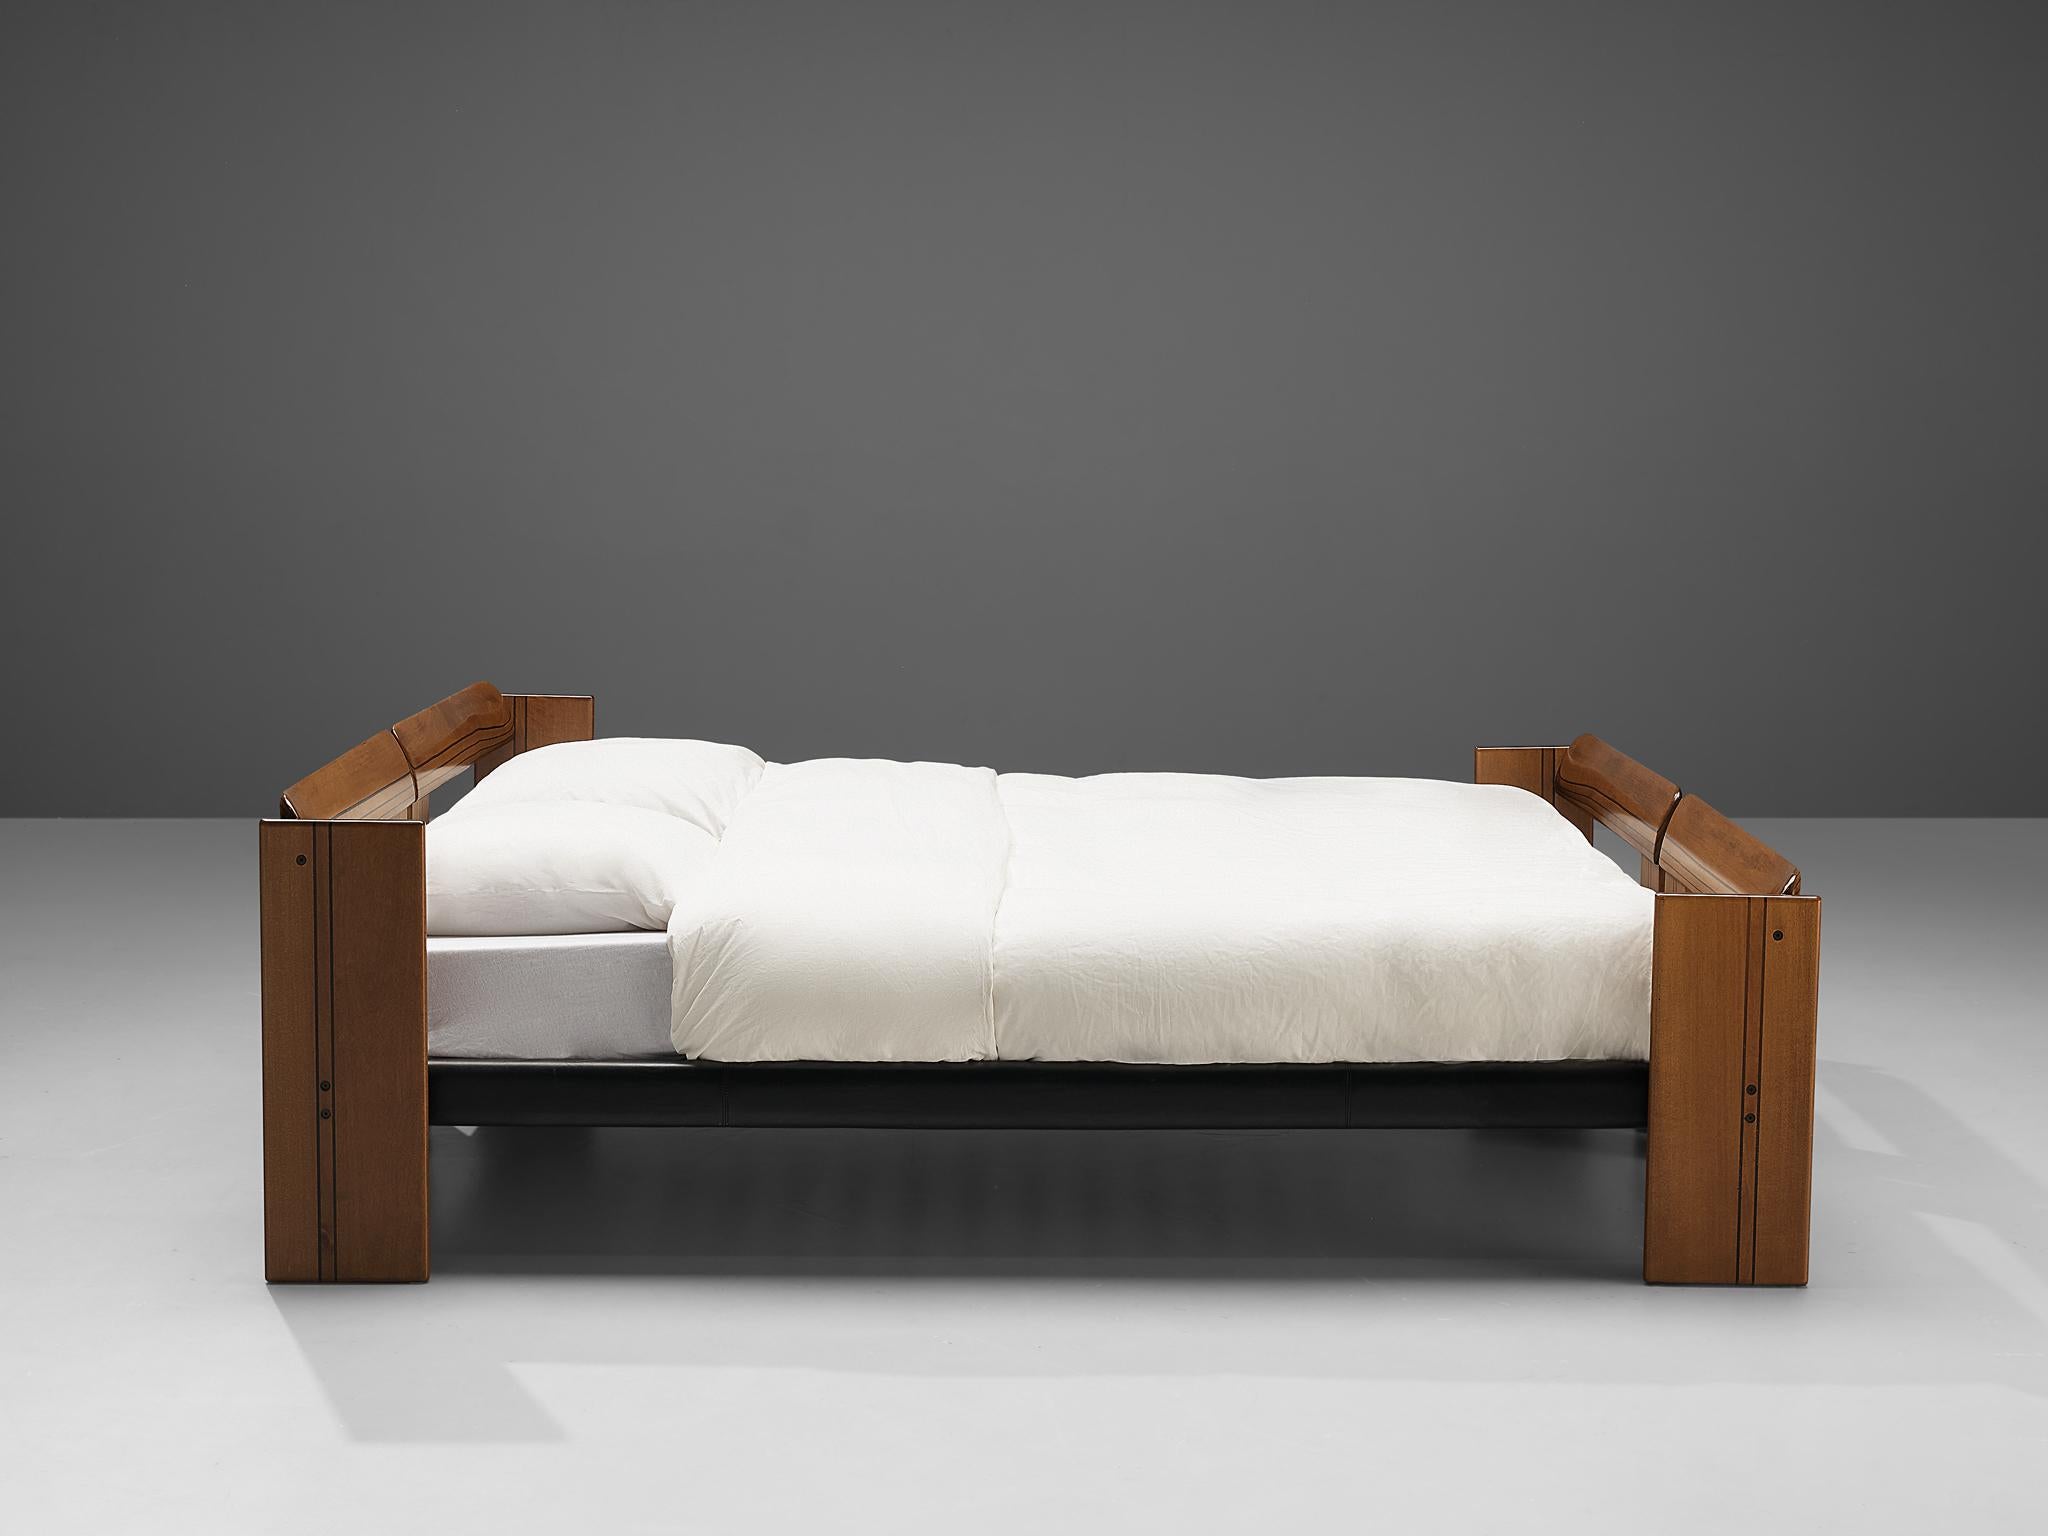 Afra & Tobia Scarpa 'Artona' Double Bed with Nightstands 4